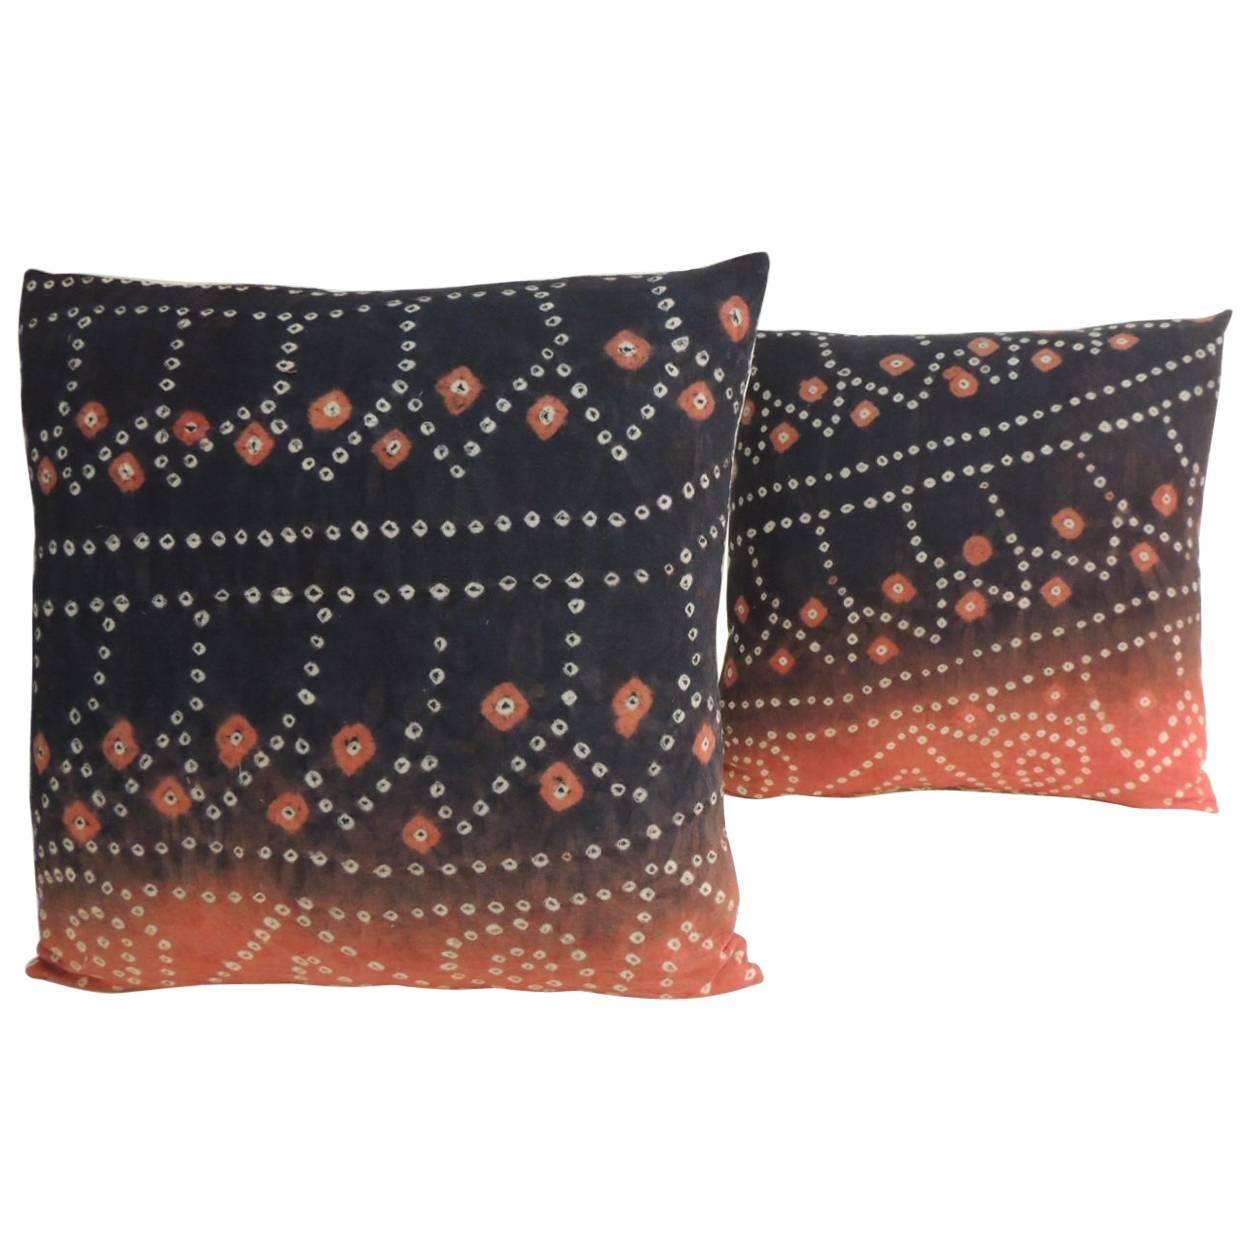 Pr. of Vintage Textile Asian Shibori Hand-Dyed Orange & Black Decorative Pillows